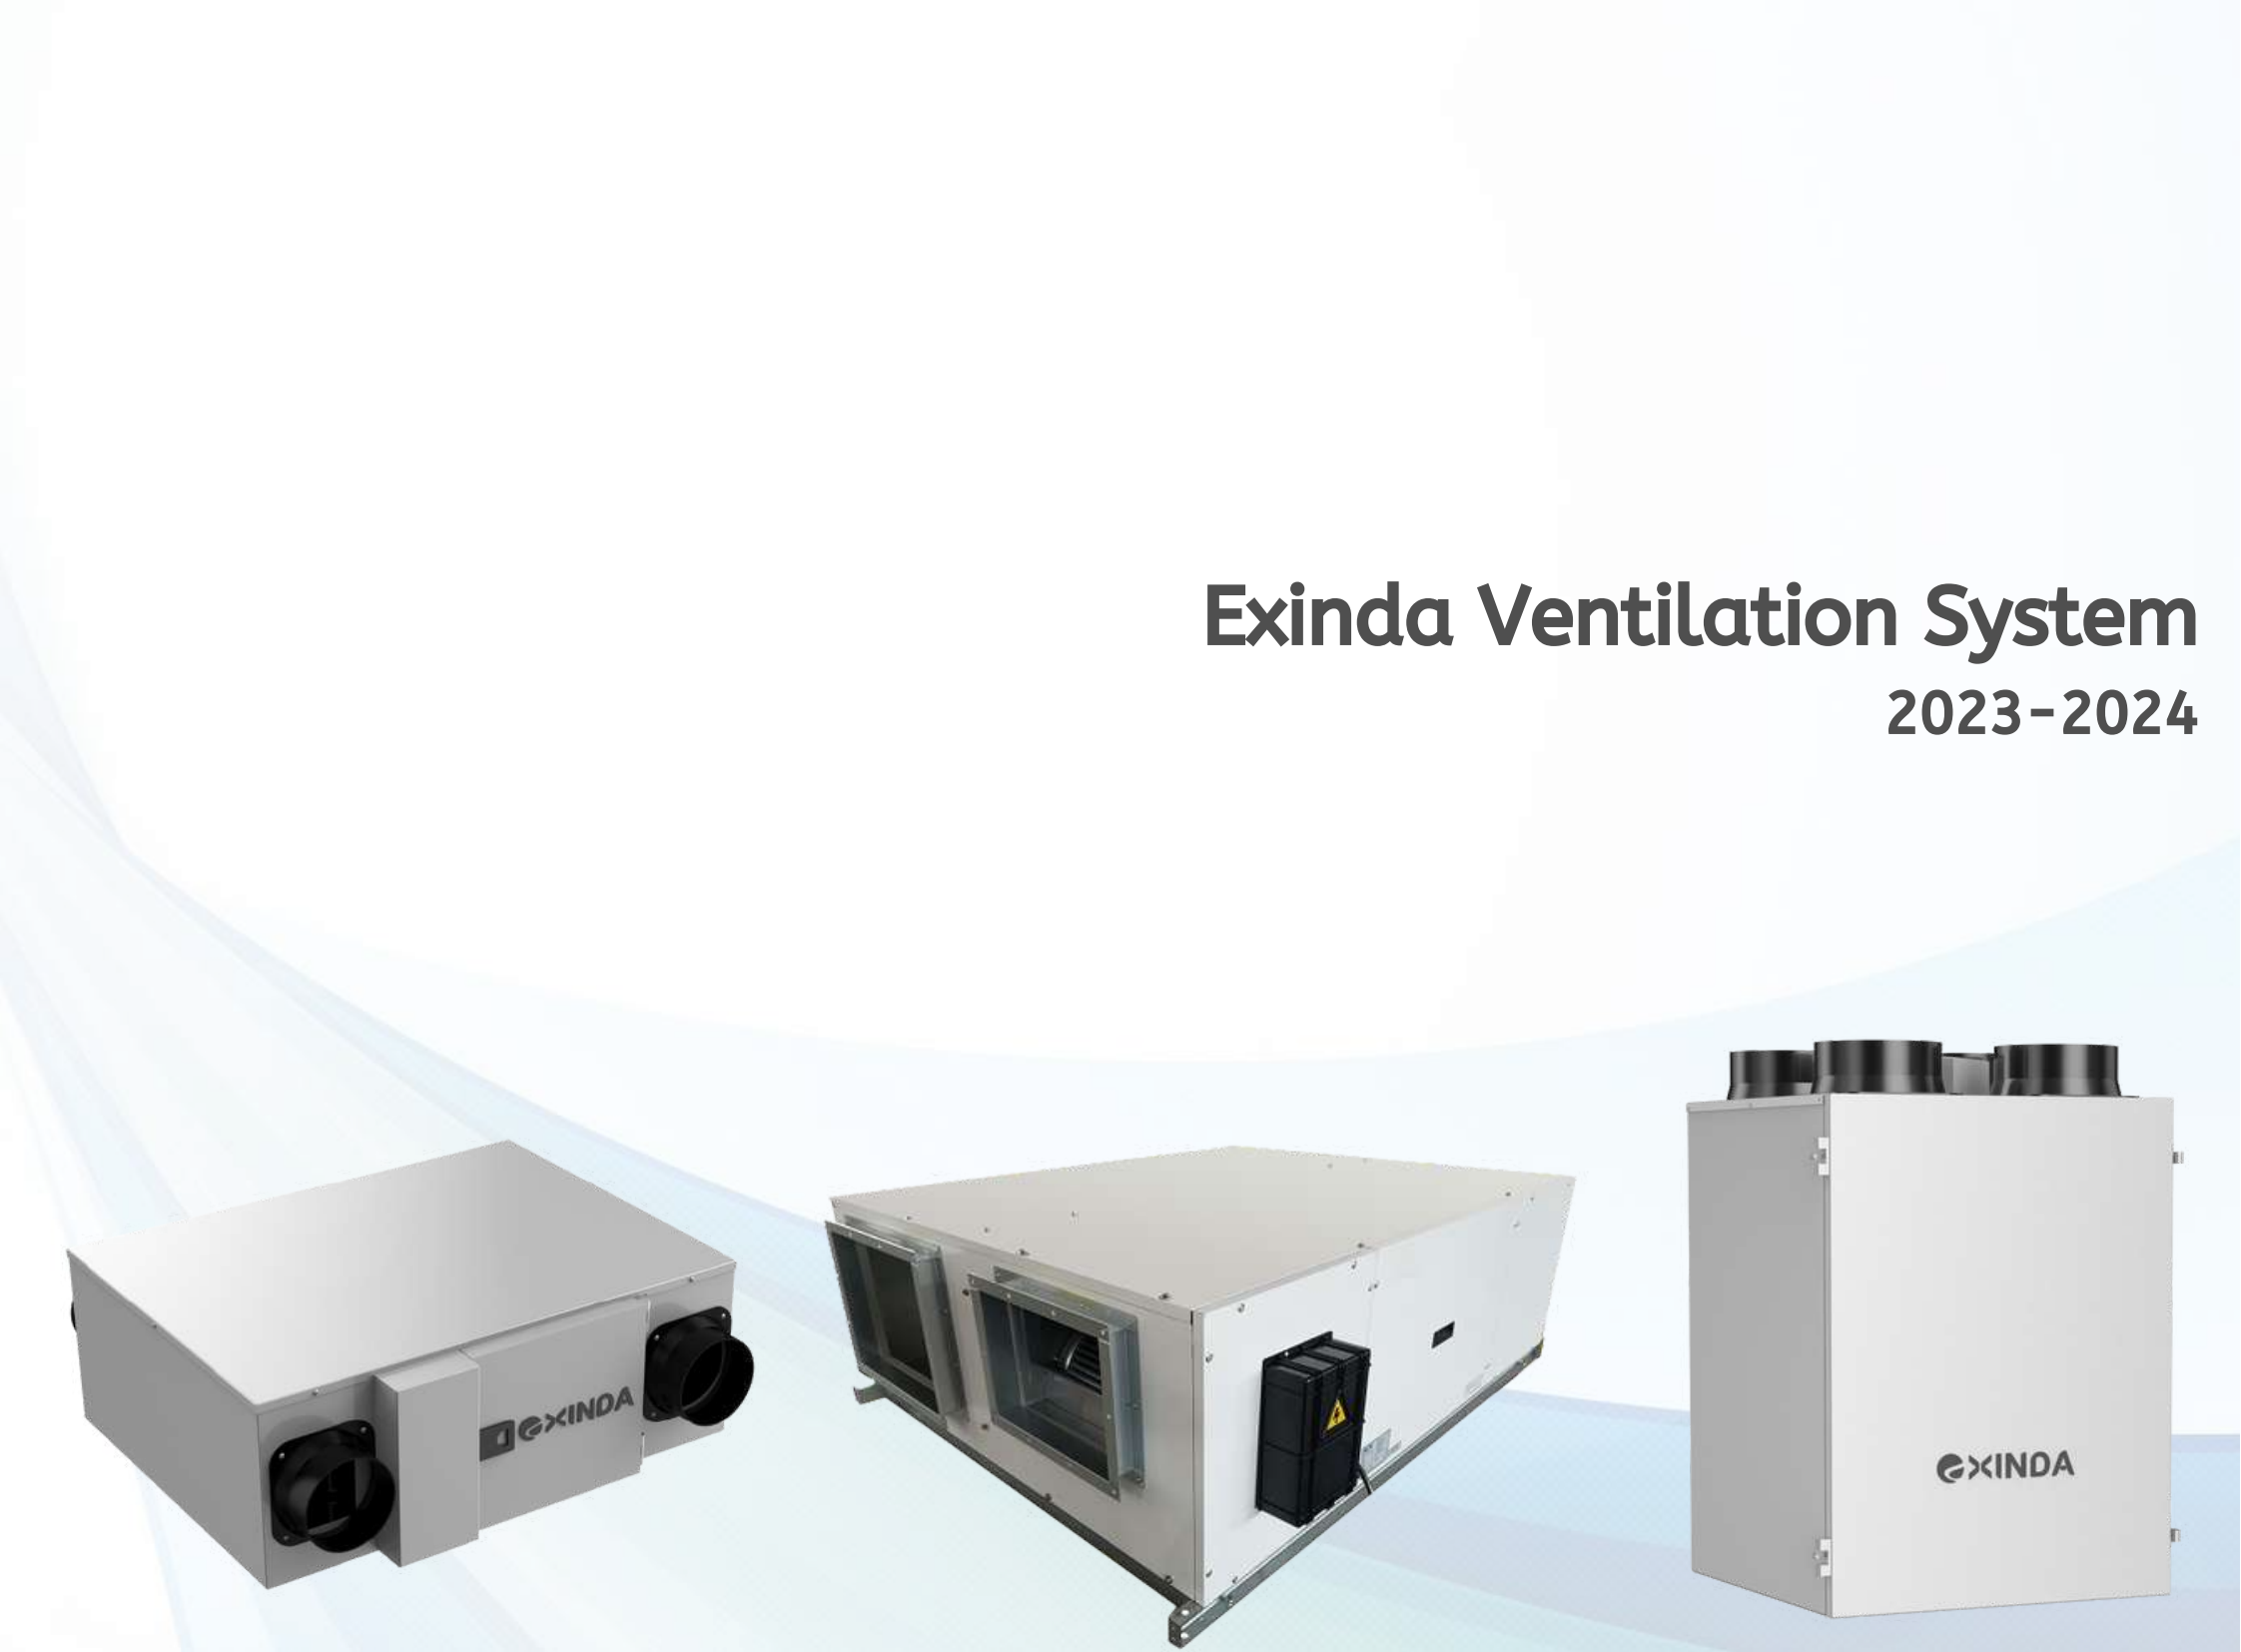 Exinda ventilation system